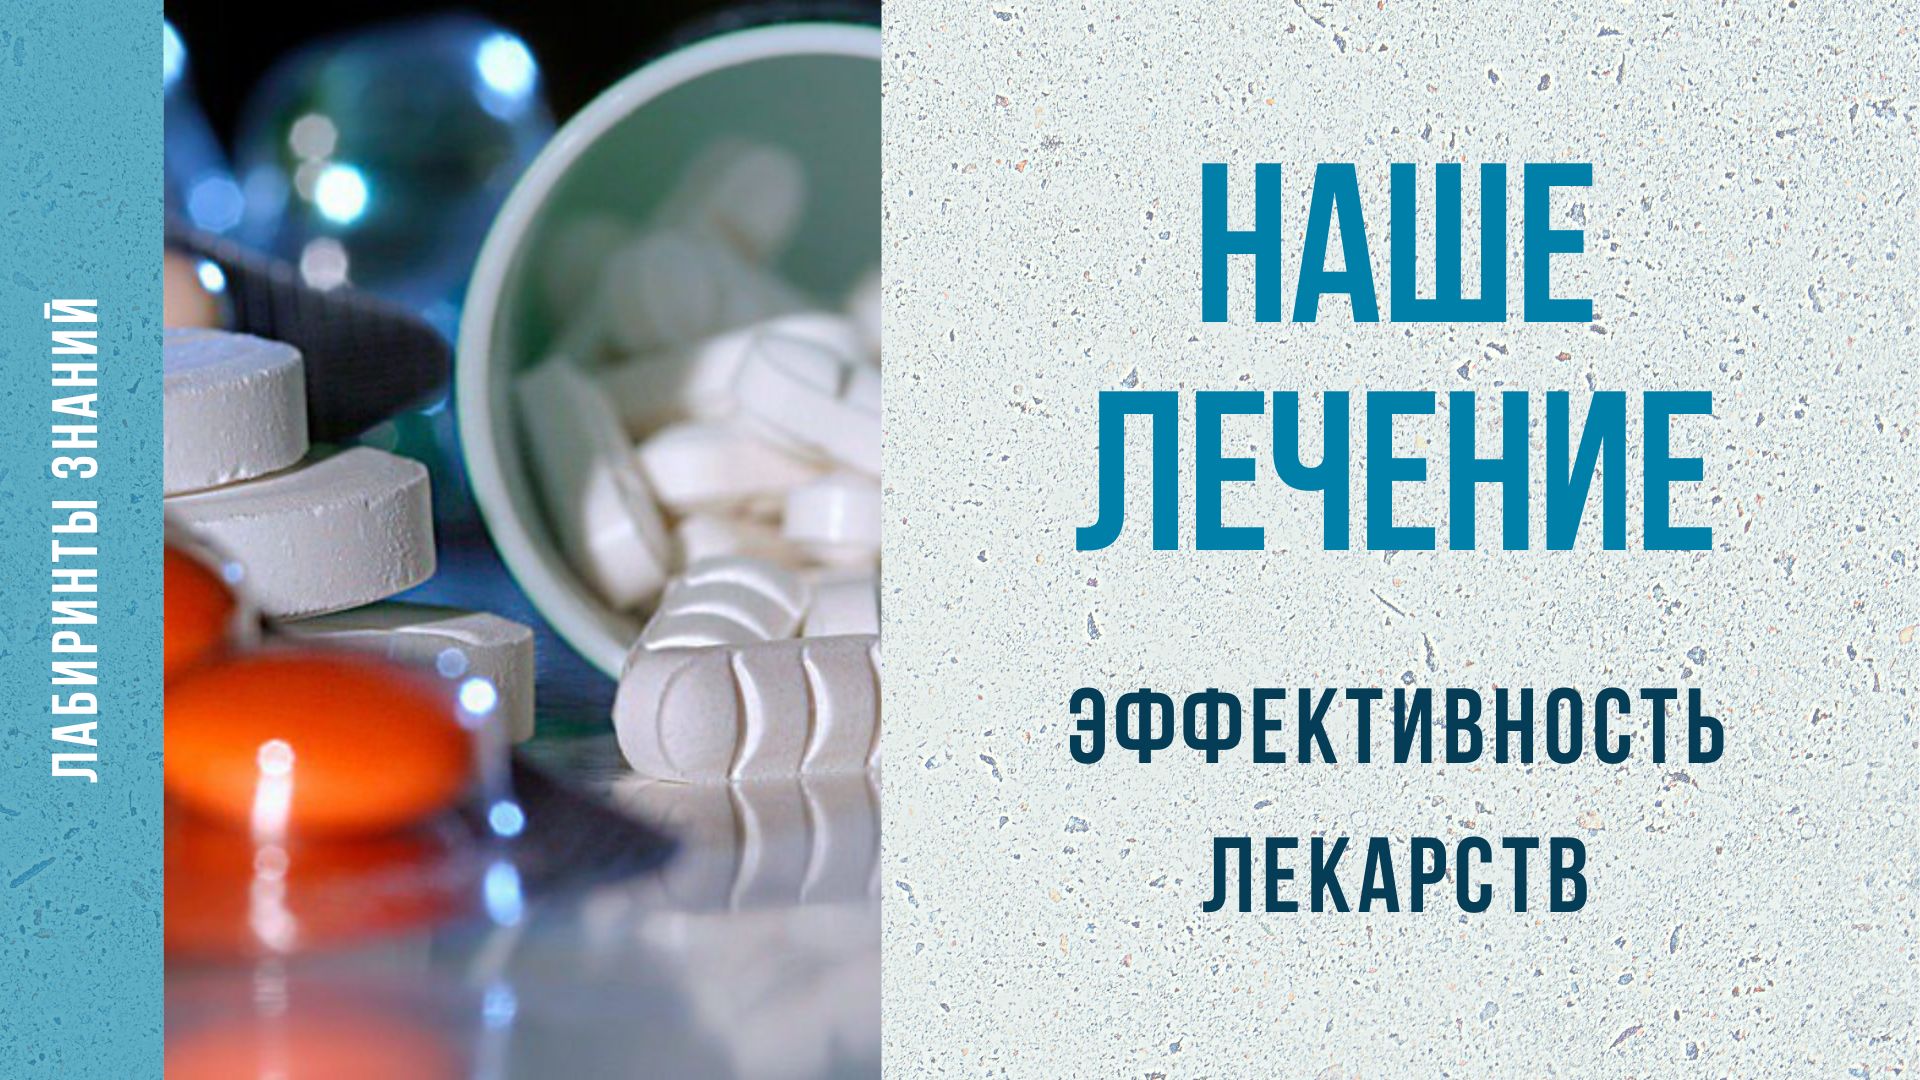 Эффективность лекарств - Лабиринты Знаний.mp4